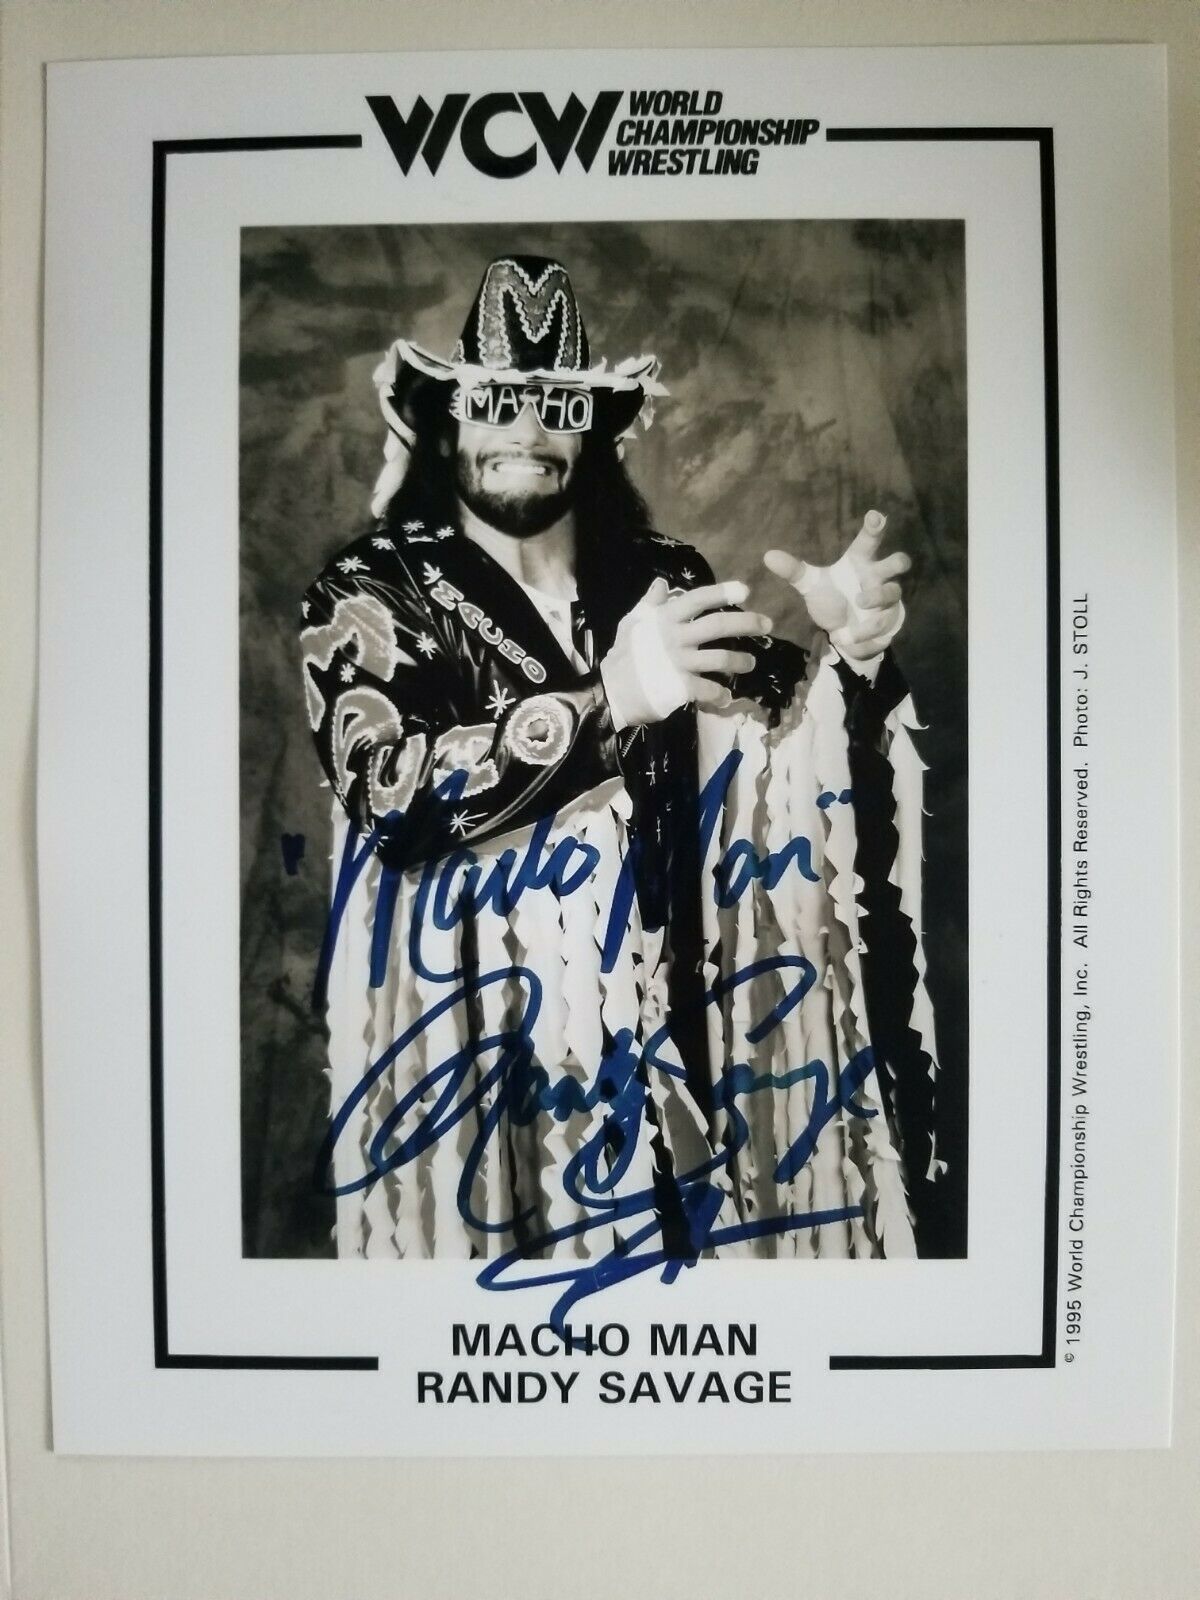 Randy Savage Signed 8x10 Photo Rp - Free Shipping!! Wwe - Macho Man